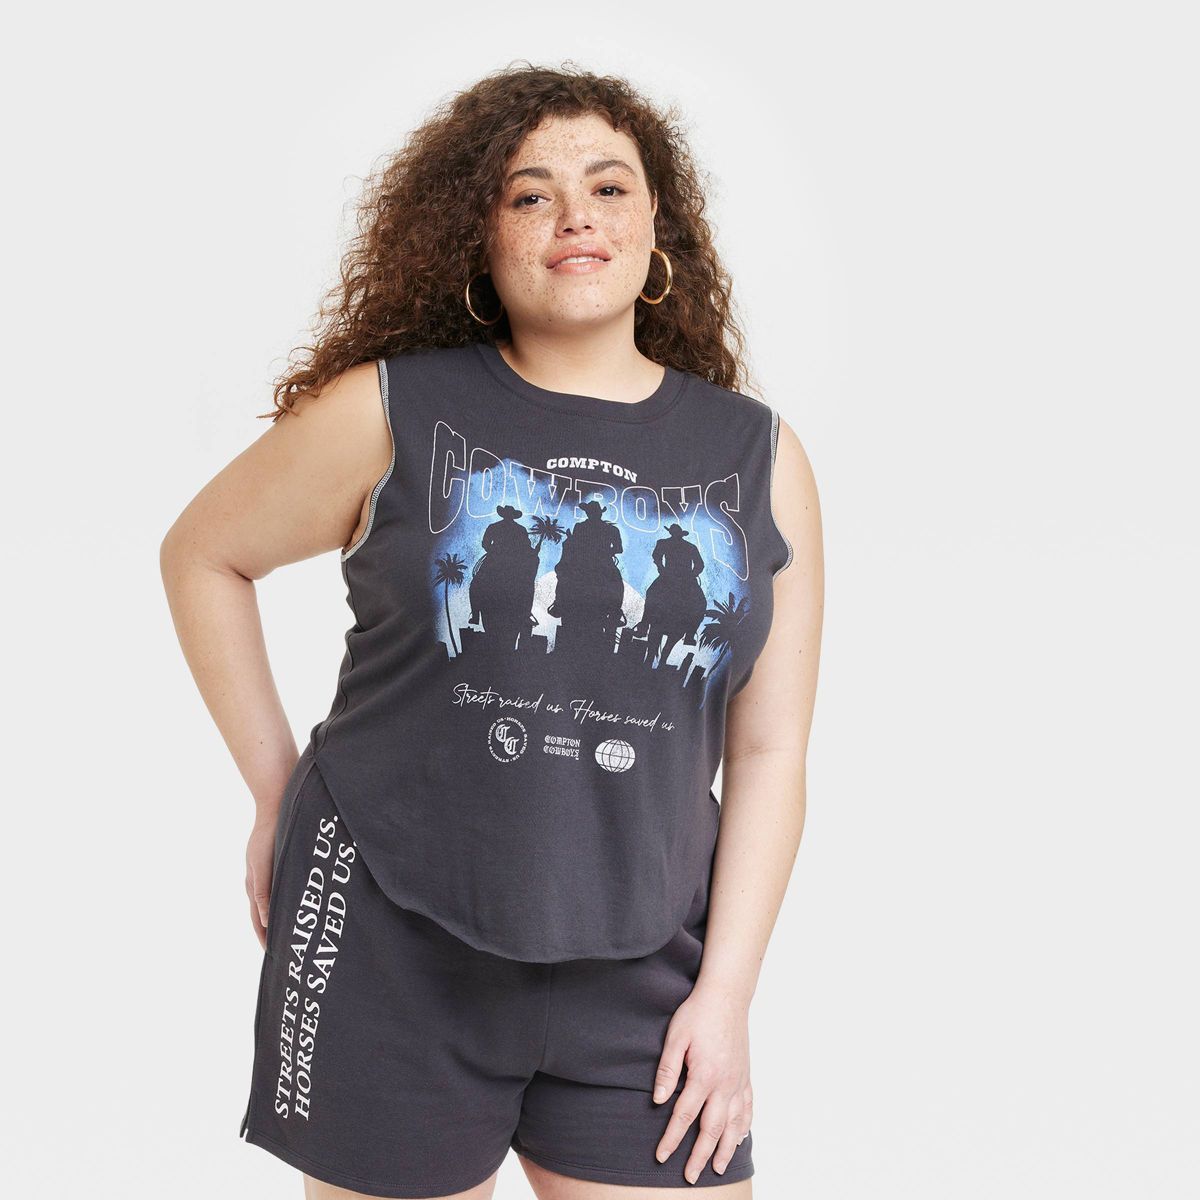 Women's Compton Cowboys Silhouette Graphic Tank Top - Black | Target